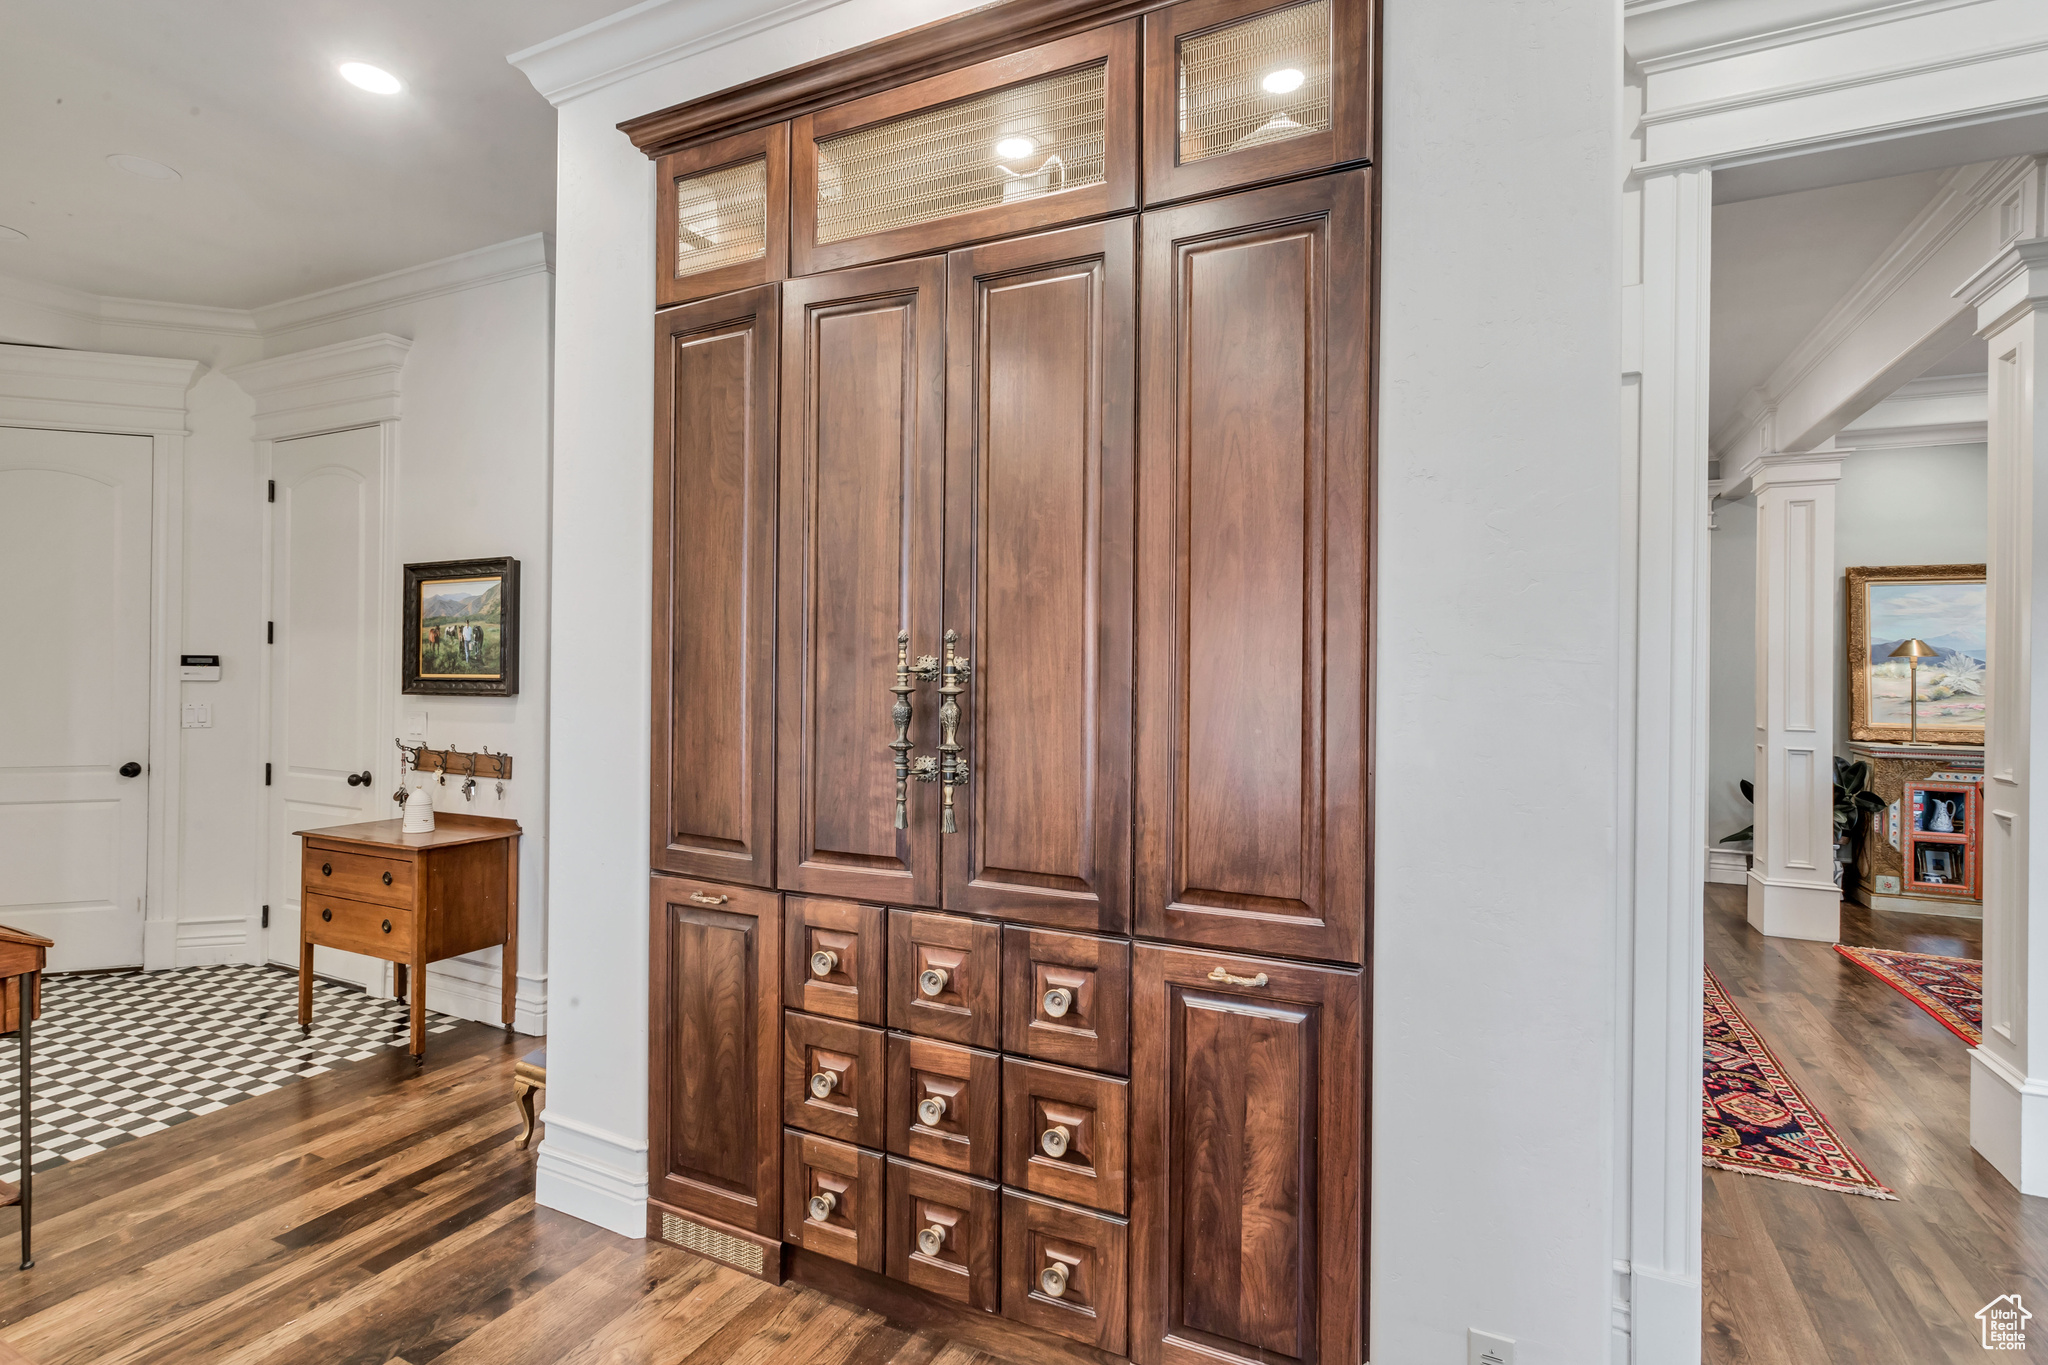 Interior space with crown molding, dark hardwood / wood floors, dark brown cabinets, and ornate columns